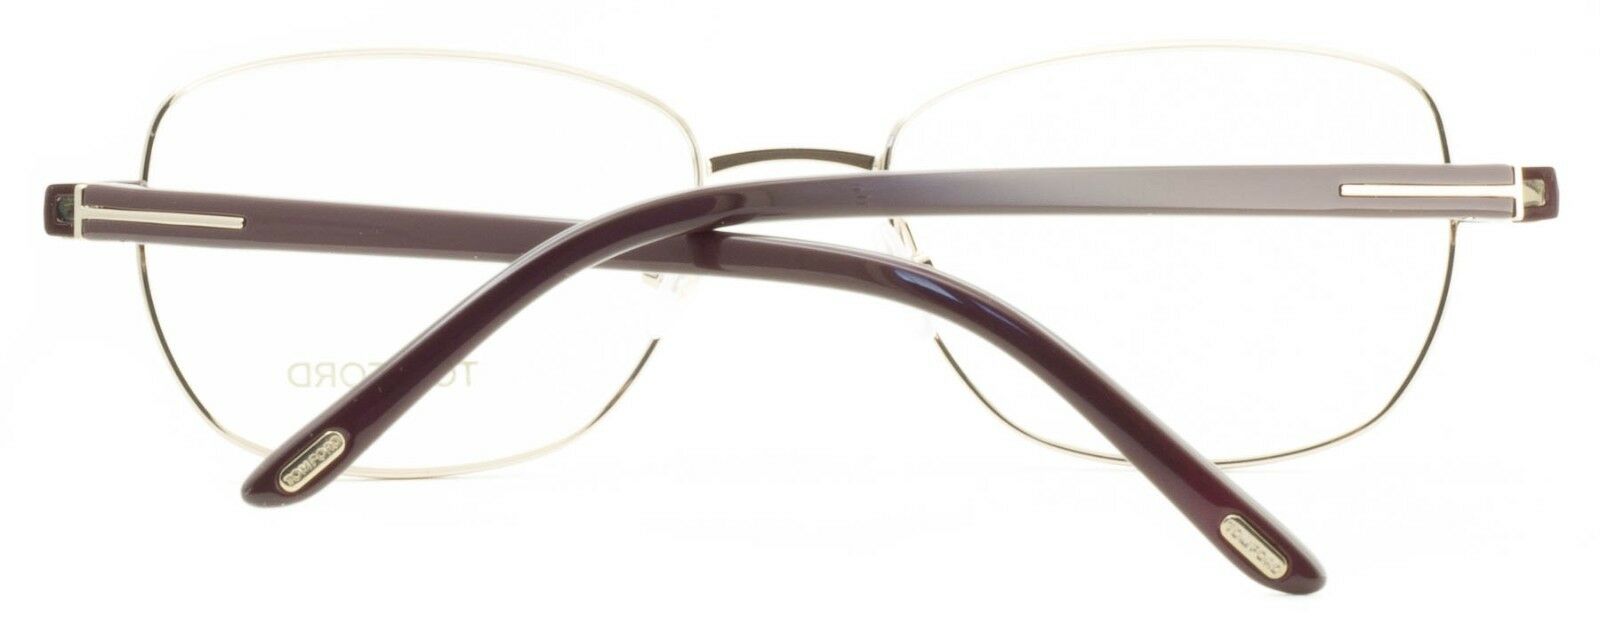 TOM FORD TF 5152 28A 54mm Eyewear FRAMES RX Optical Eyeglasses Glasses New Italy